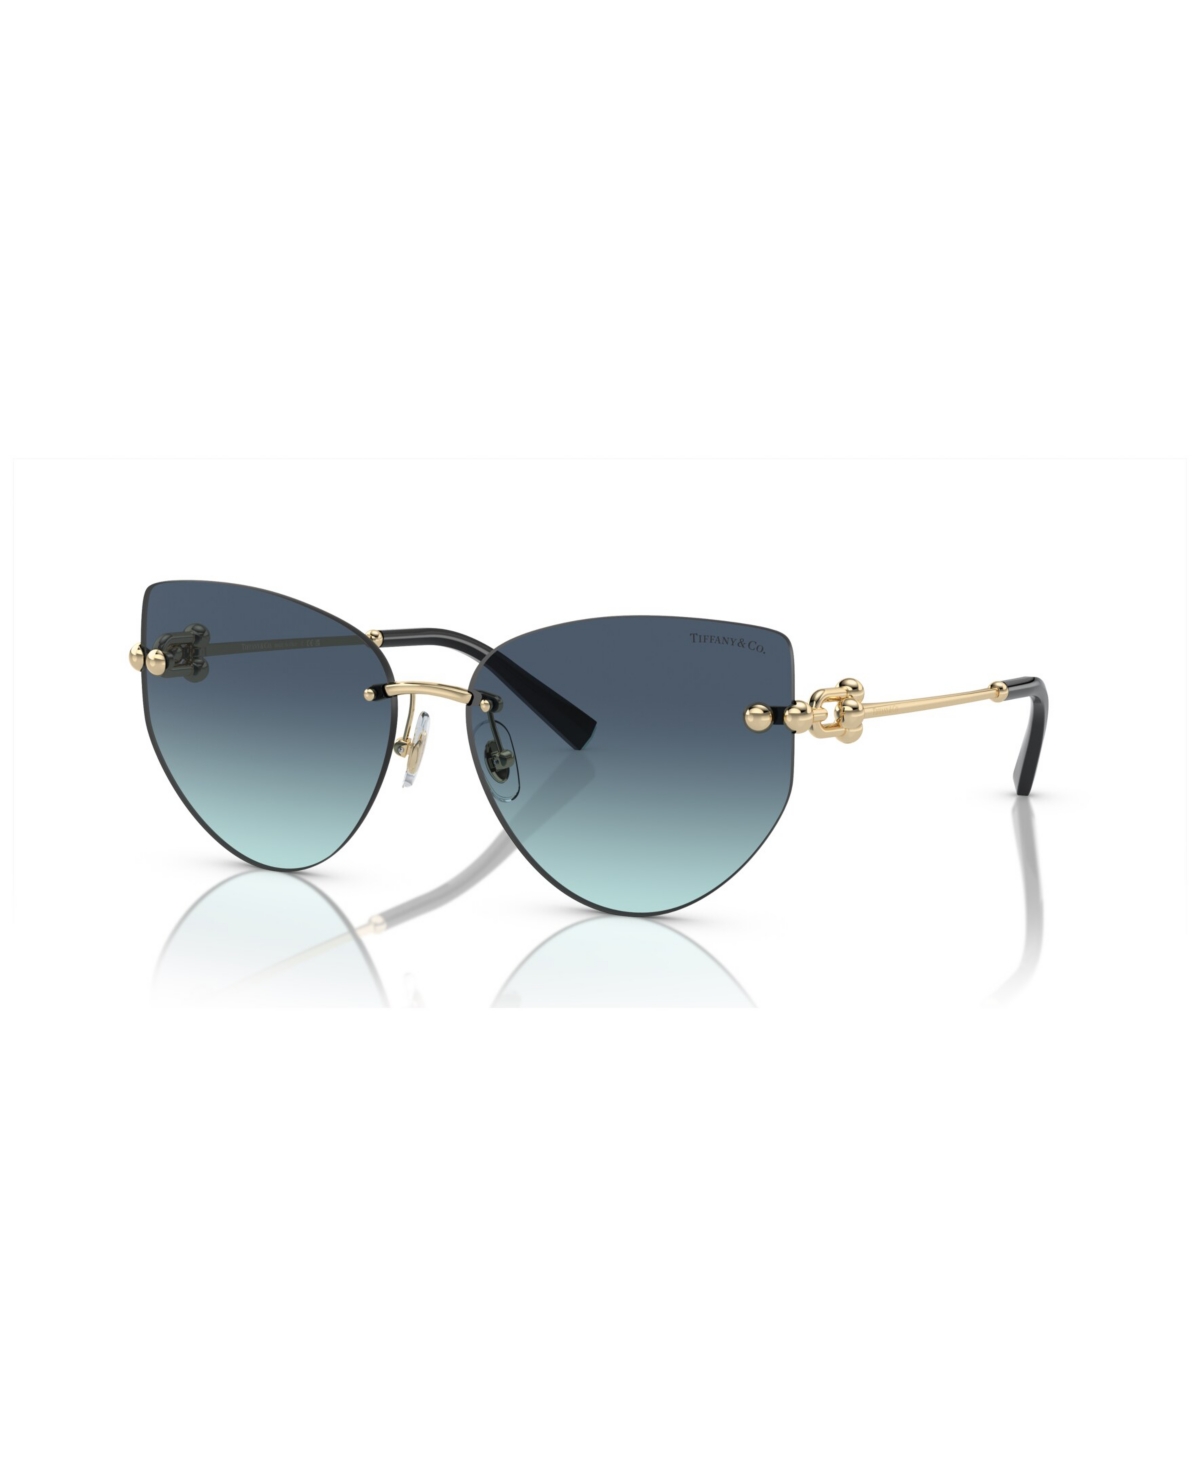 Tiffany & Co Women's Sunglasses, Gradient Tf3096 In Pale Gold